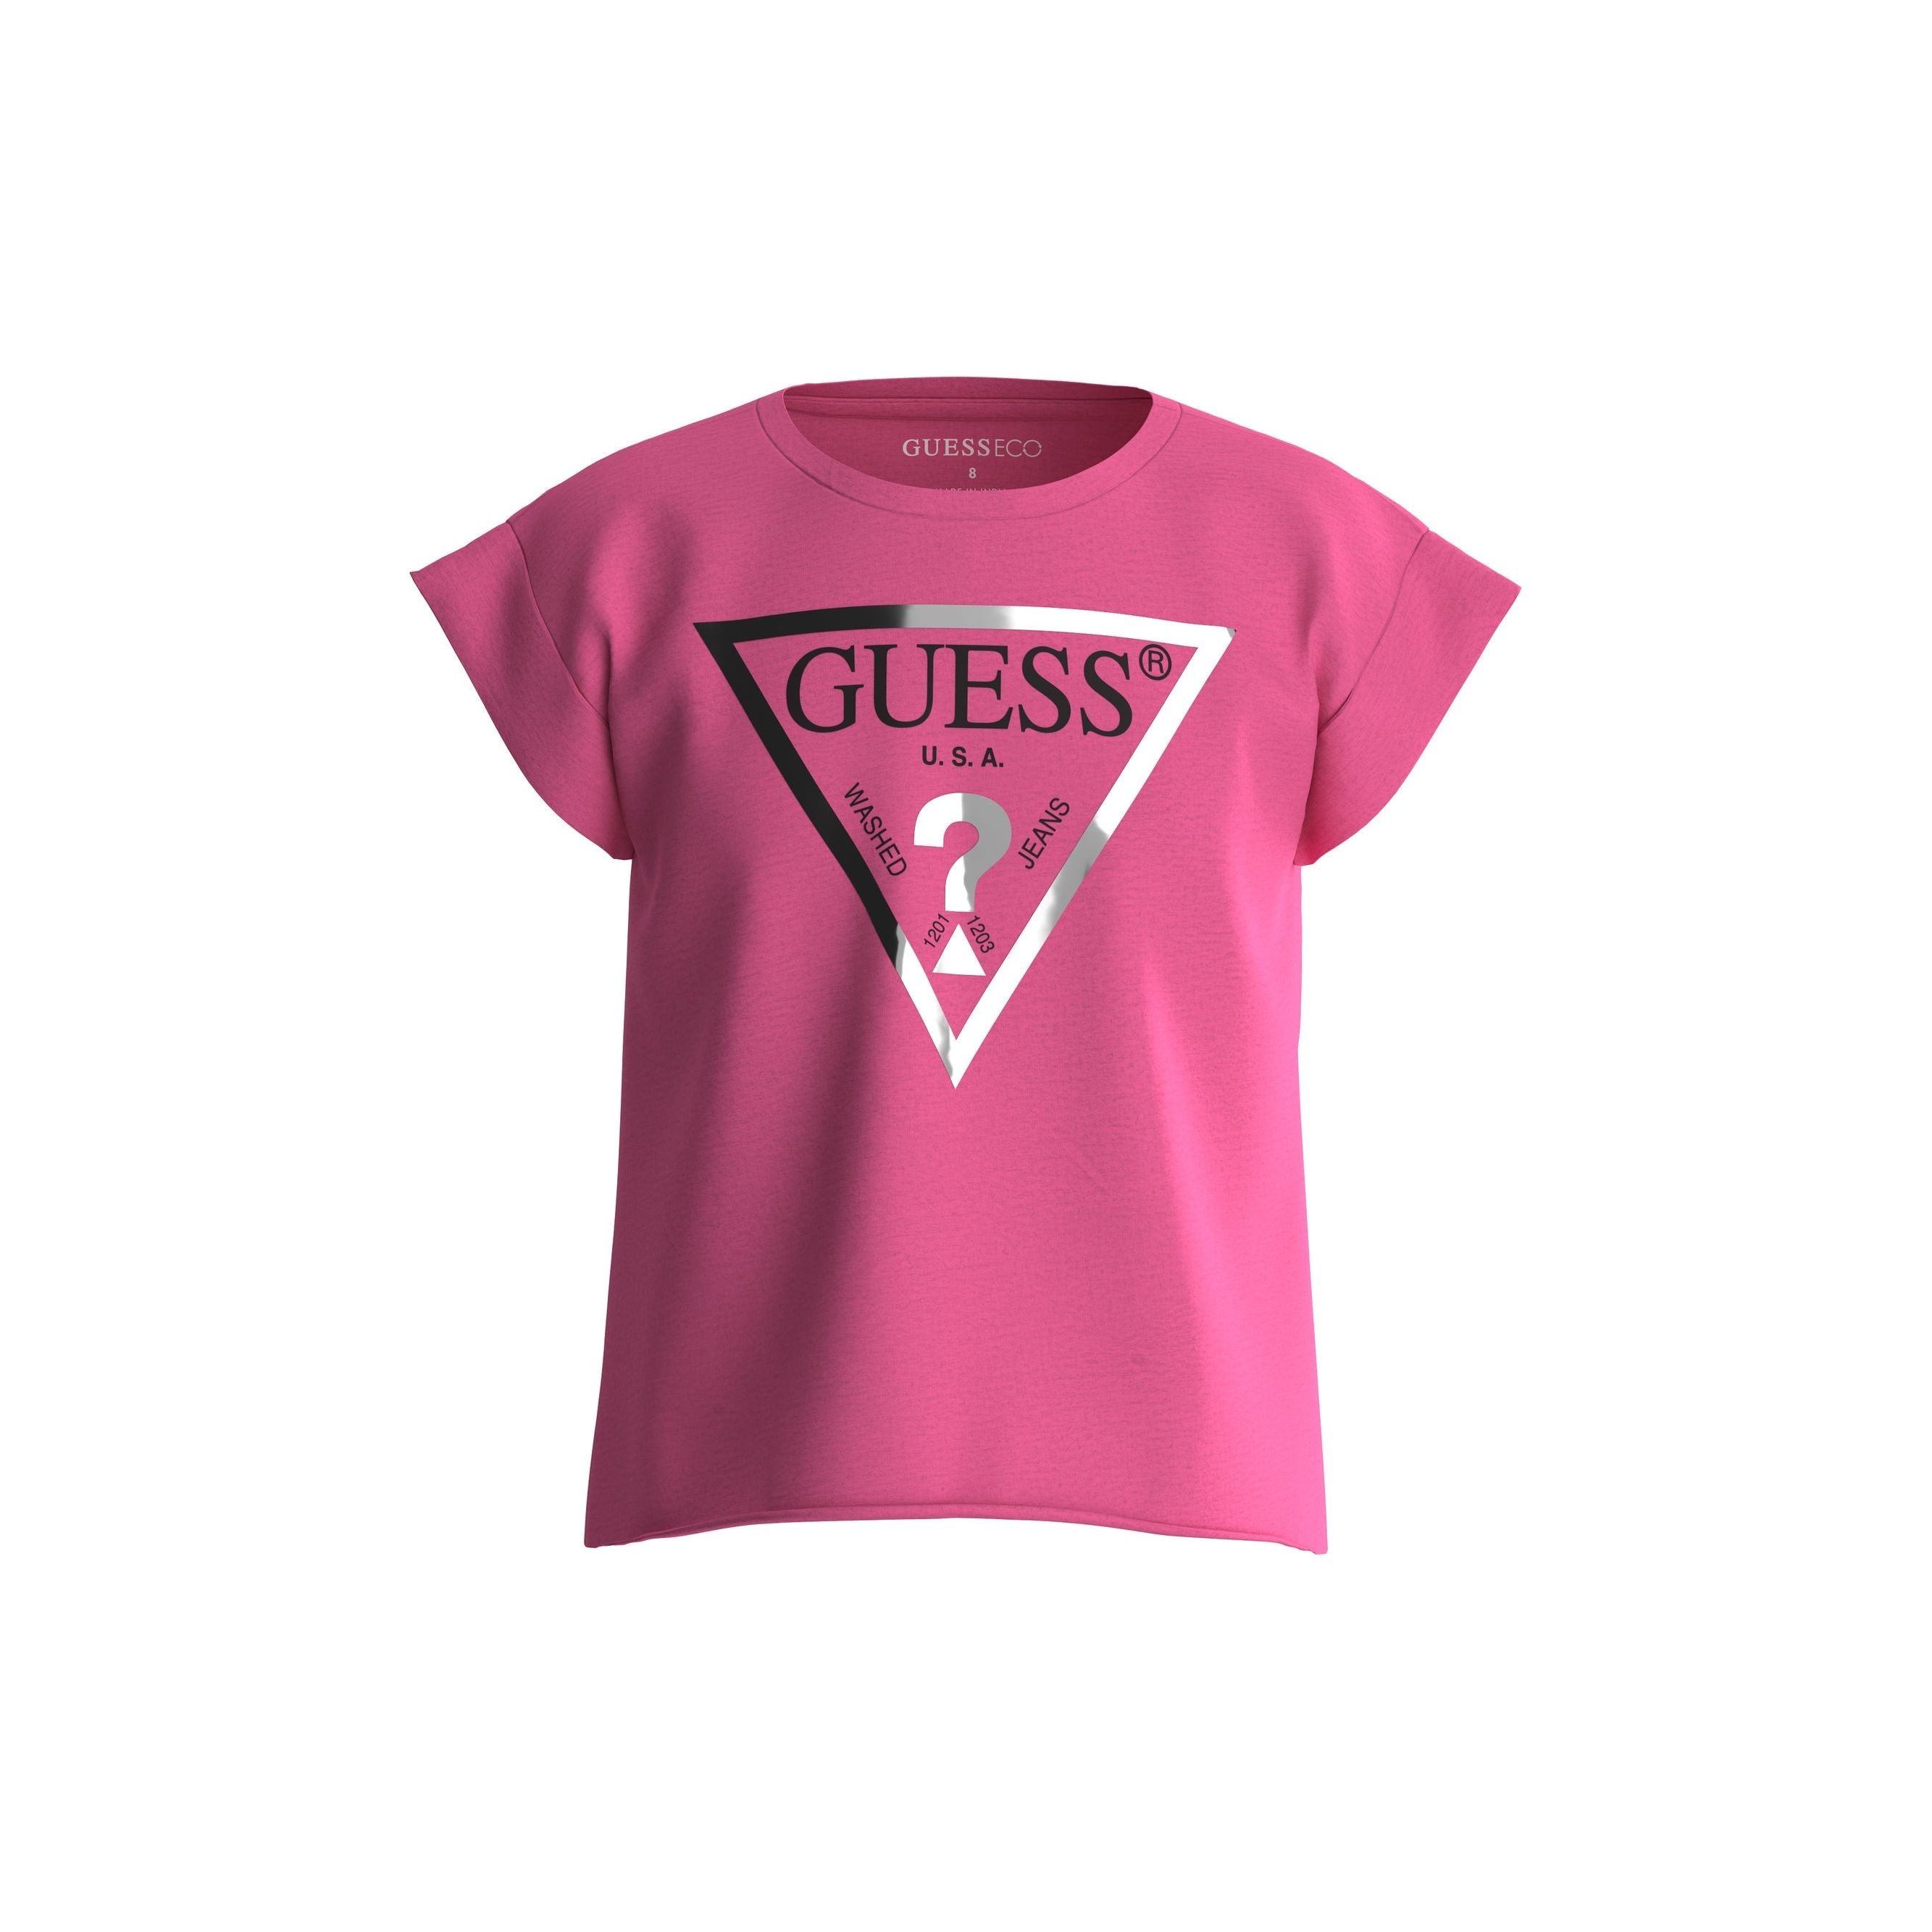 Guess - Girls Logo Tee in Pink